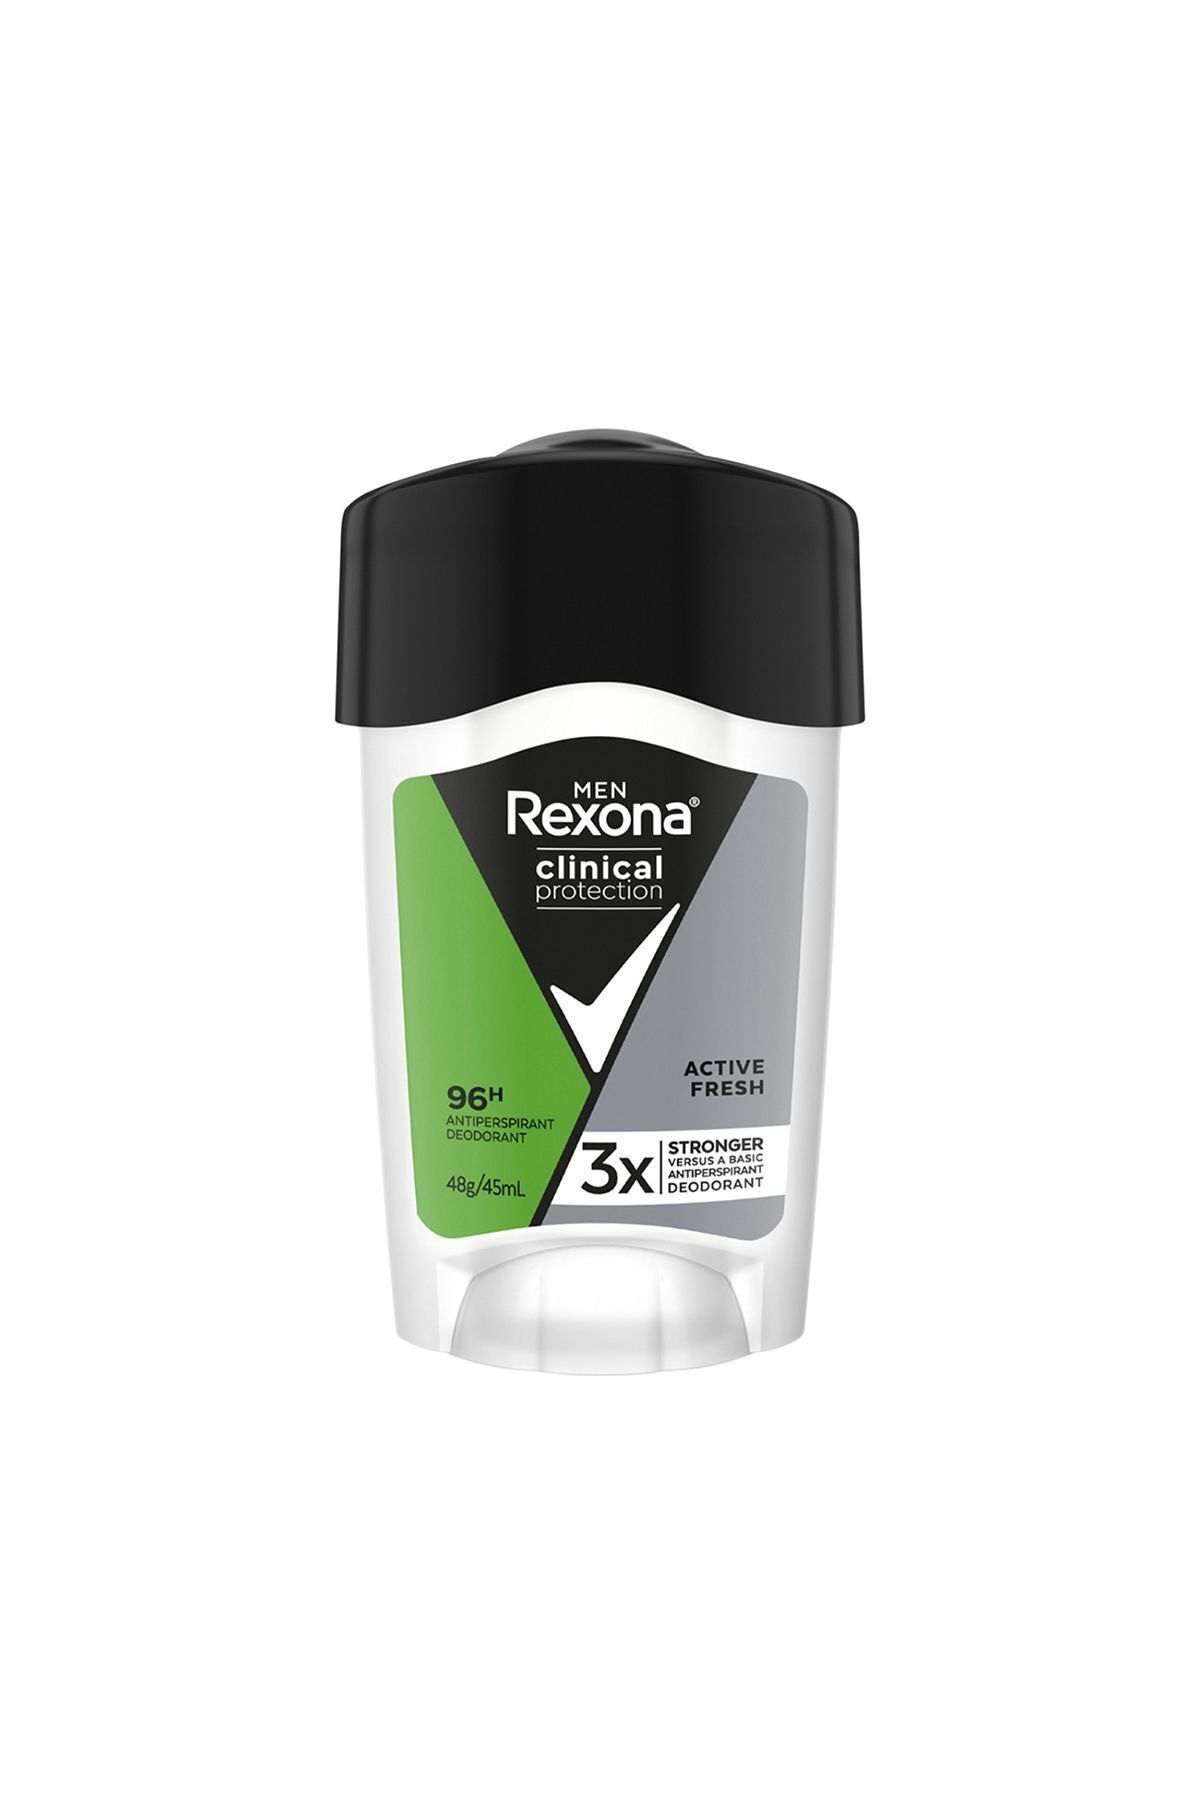 Rexona Men Clinical Protection Erkek Stick Deodorant Active Fresh 96 Saat Koruma 45 ml